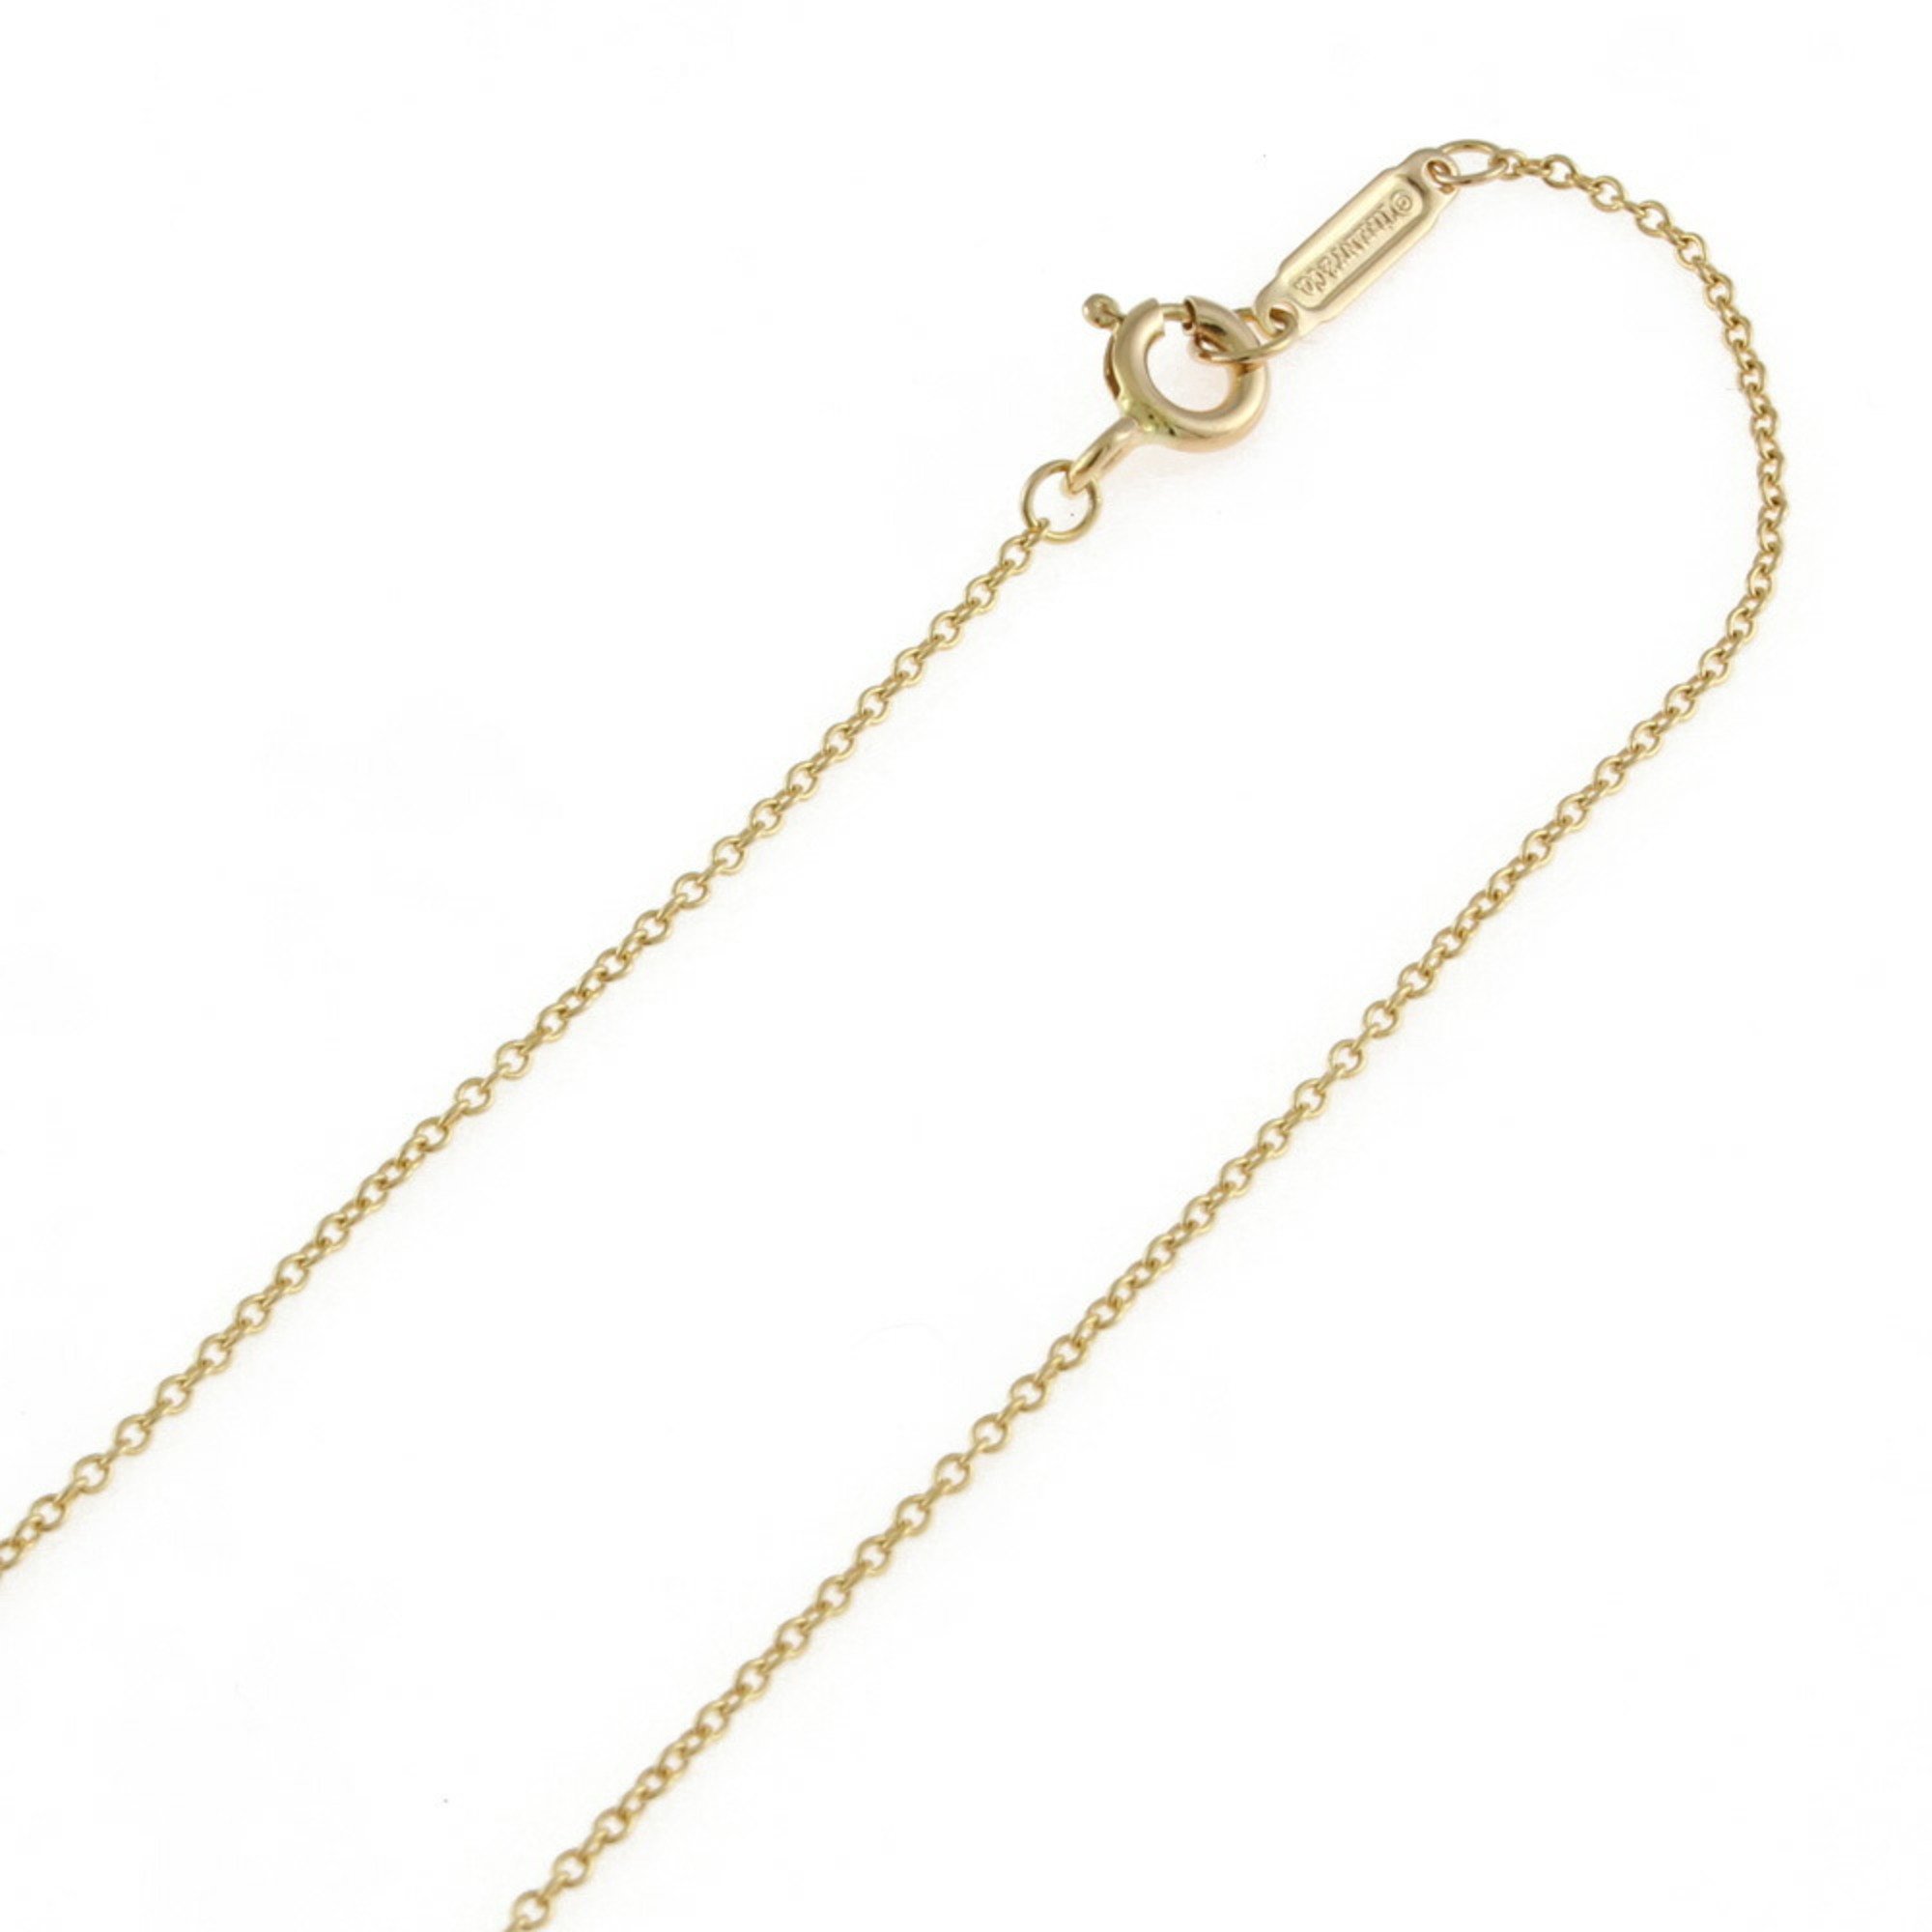 Tiffany TIFFANY & Co. Necklace 18K Gold Diamond Ladies